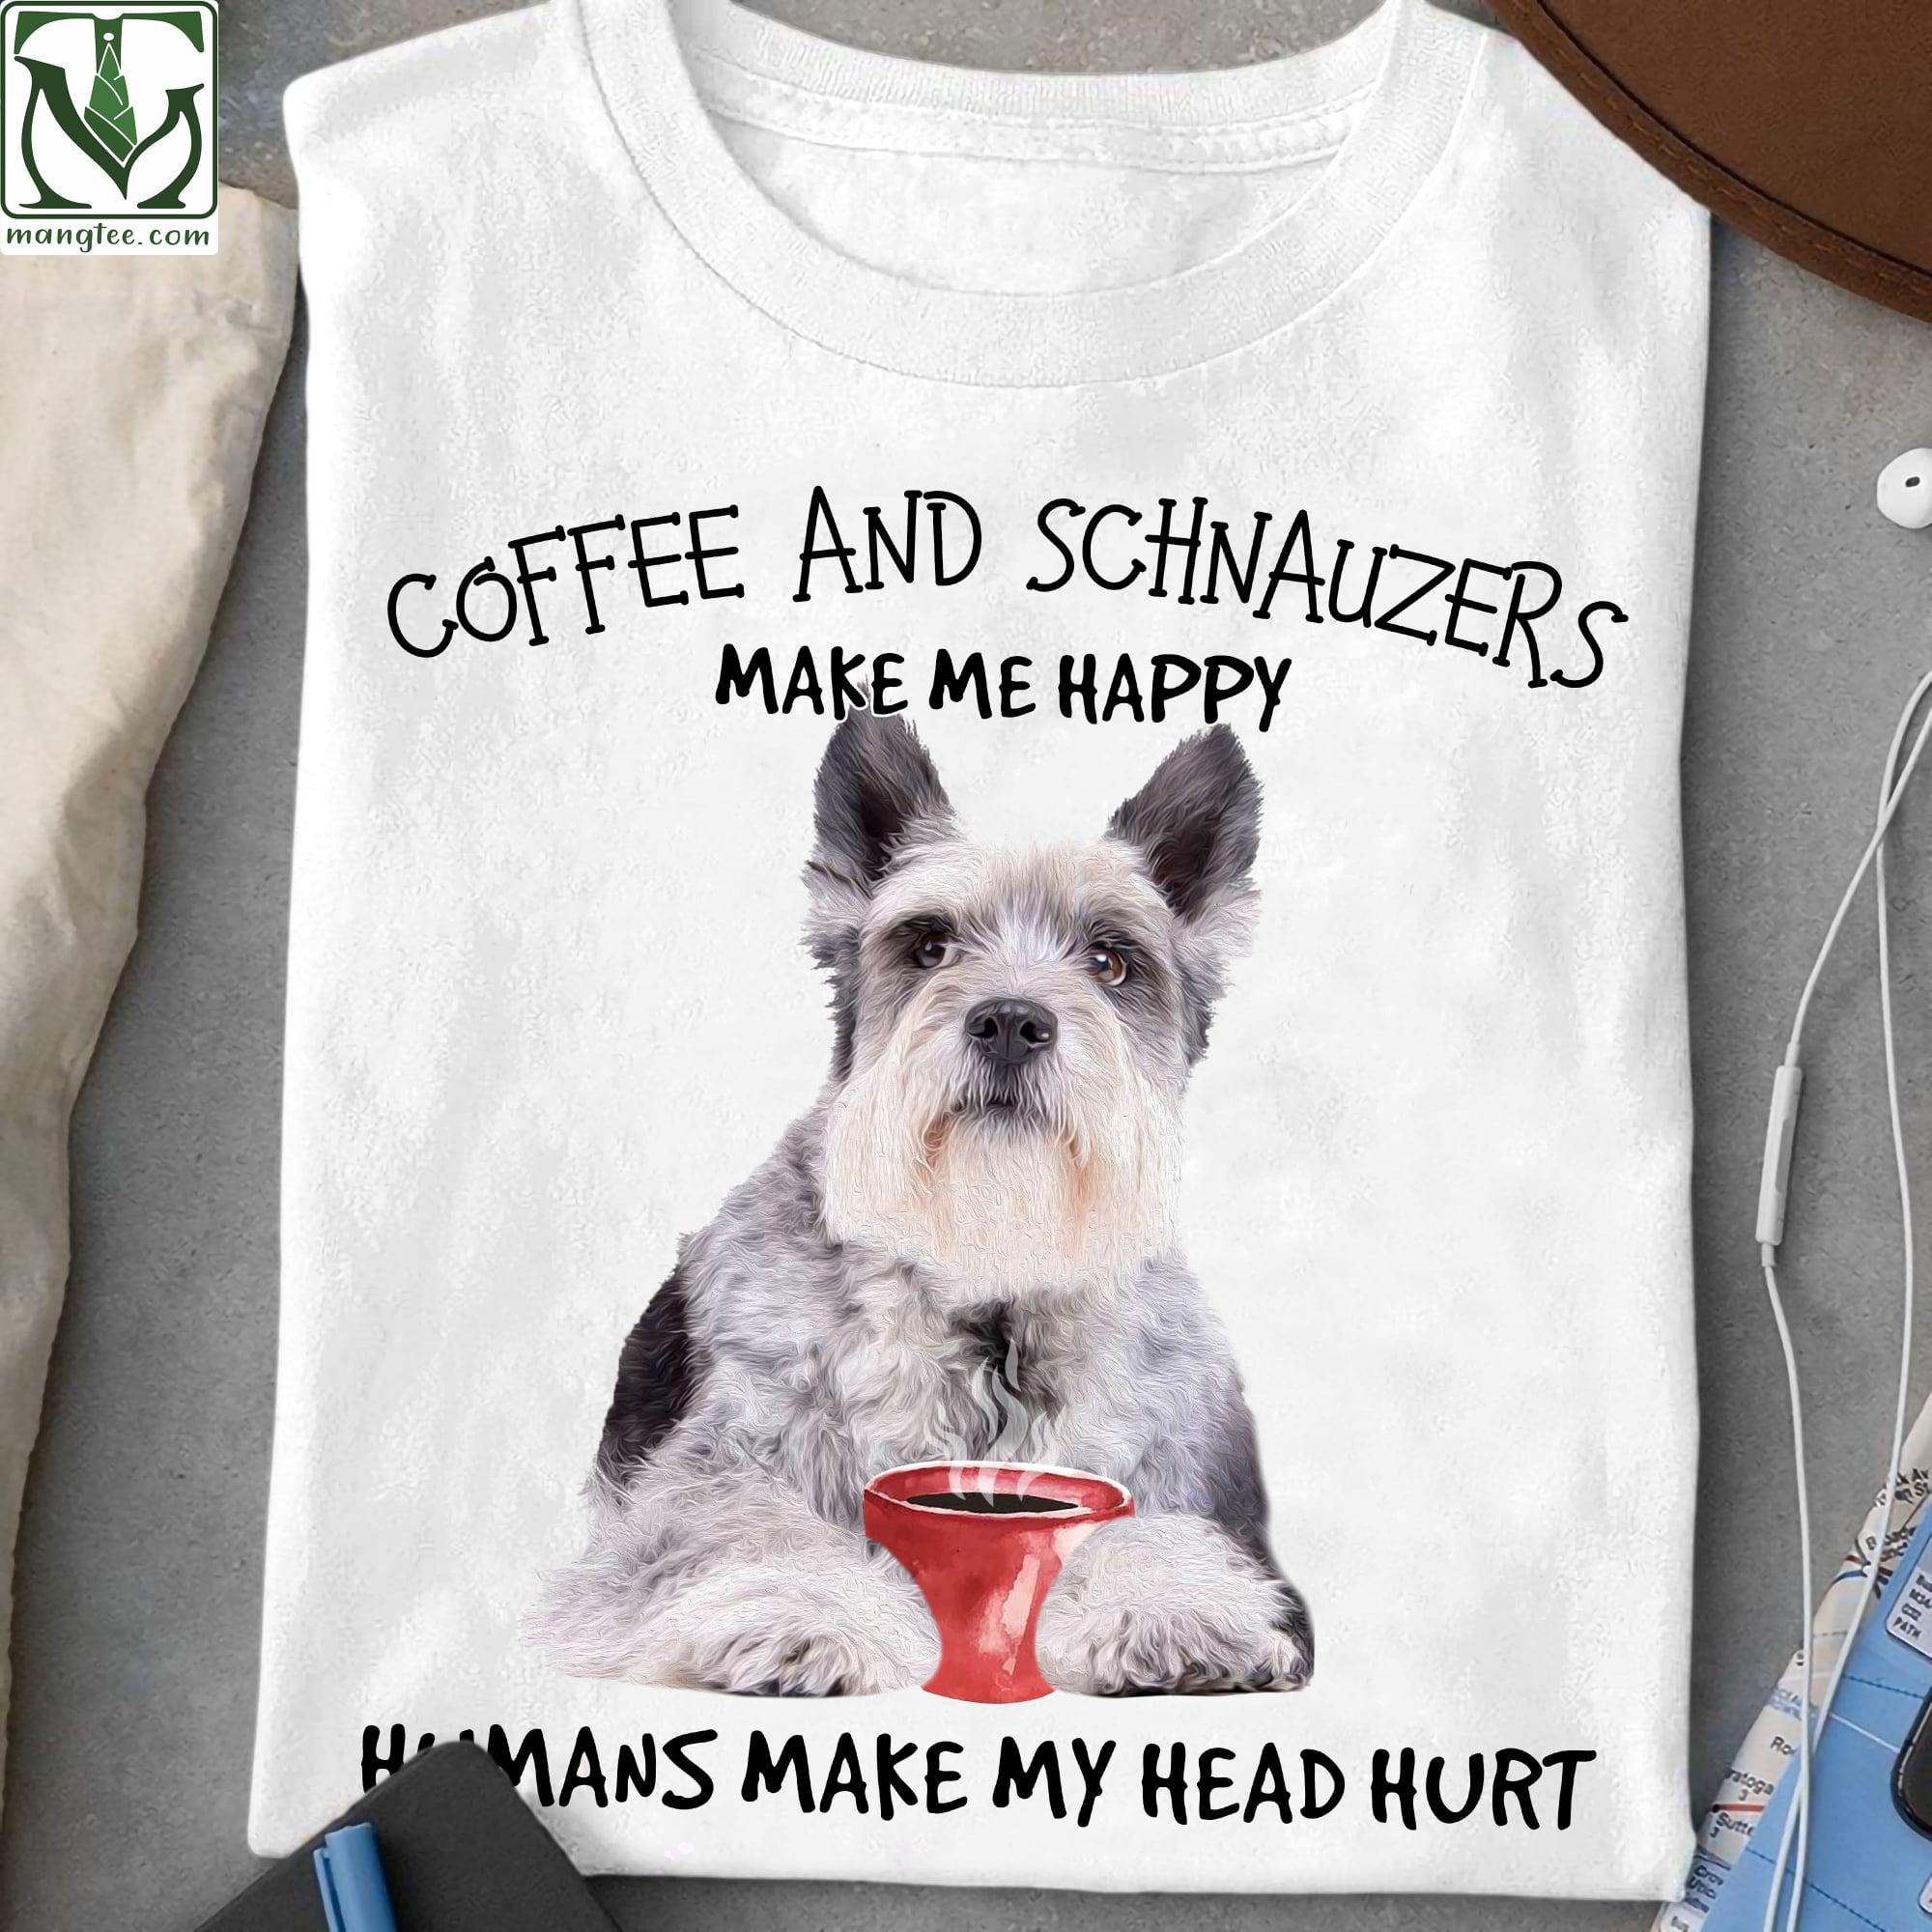 Coffee and Schnauzers make me happy, humans make my head hurt - Dog and coffee, Schnauzers dog lover